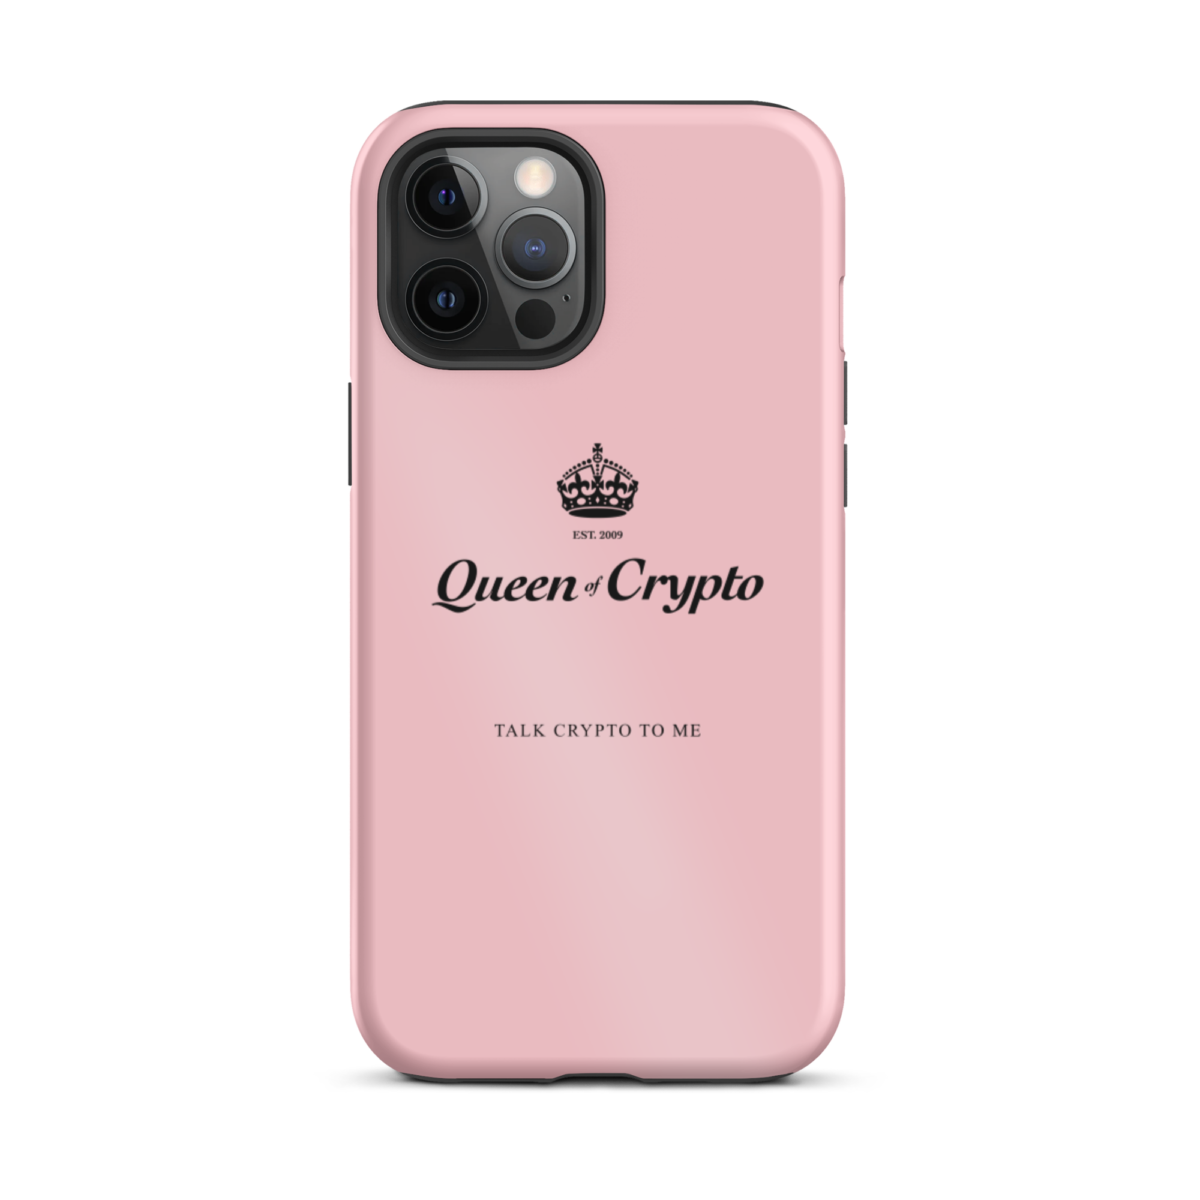 tough iphone case glossy iphone 12 pro max front 6345e1ac949de - Queen of Crypto Tough iPhone Case